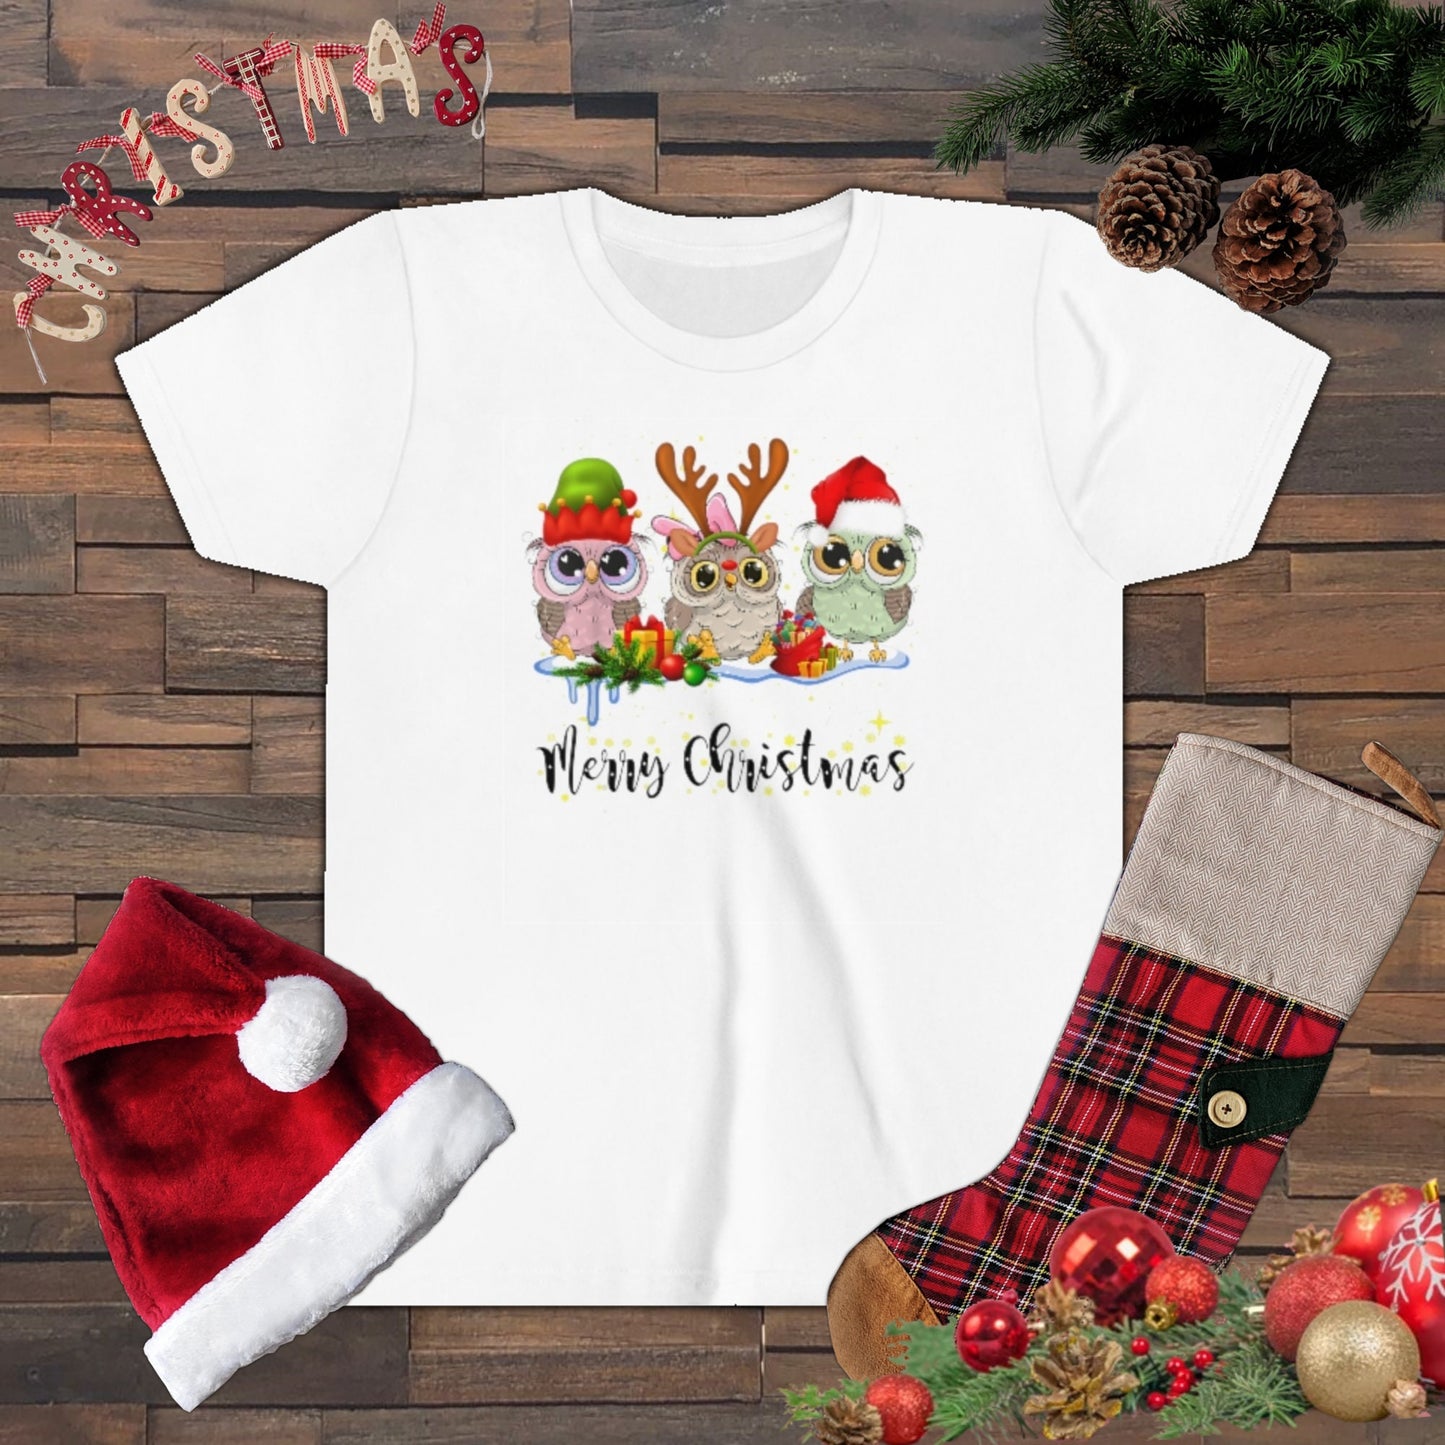 Merry Christmas Owl Shirt, Girls Owls Christmas Shirt, Youth Girls Christmas Shirt, Christmas Shirt, Holiday Party Shirt, Owl Lover Shirt